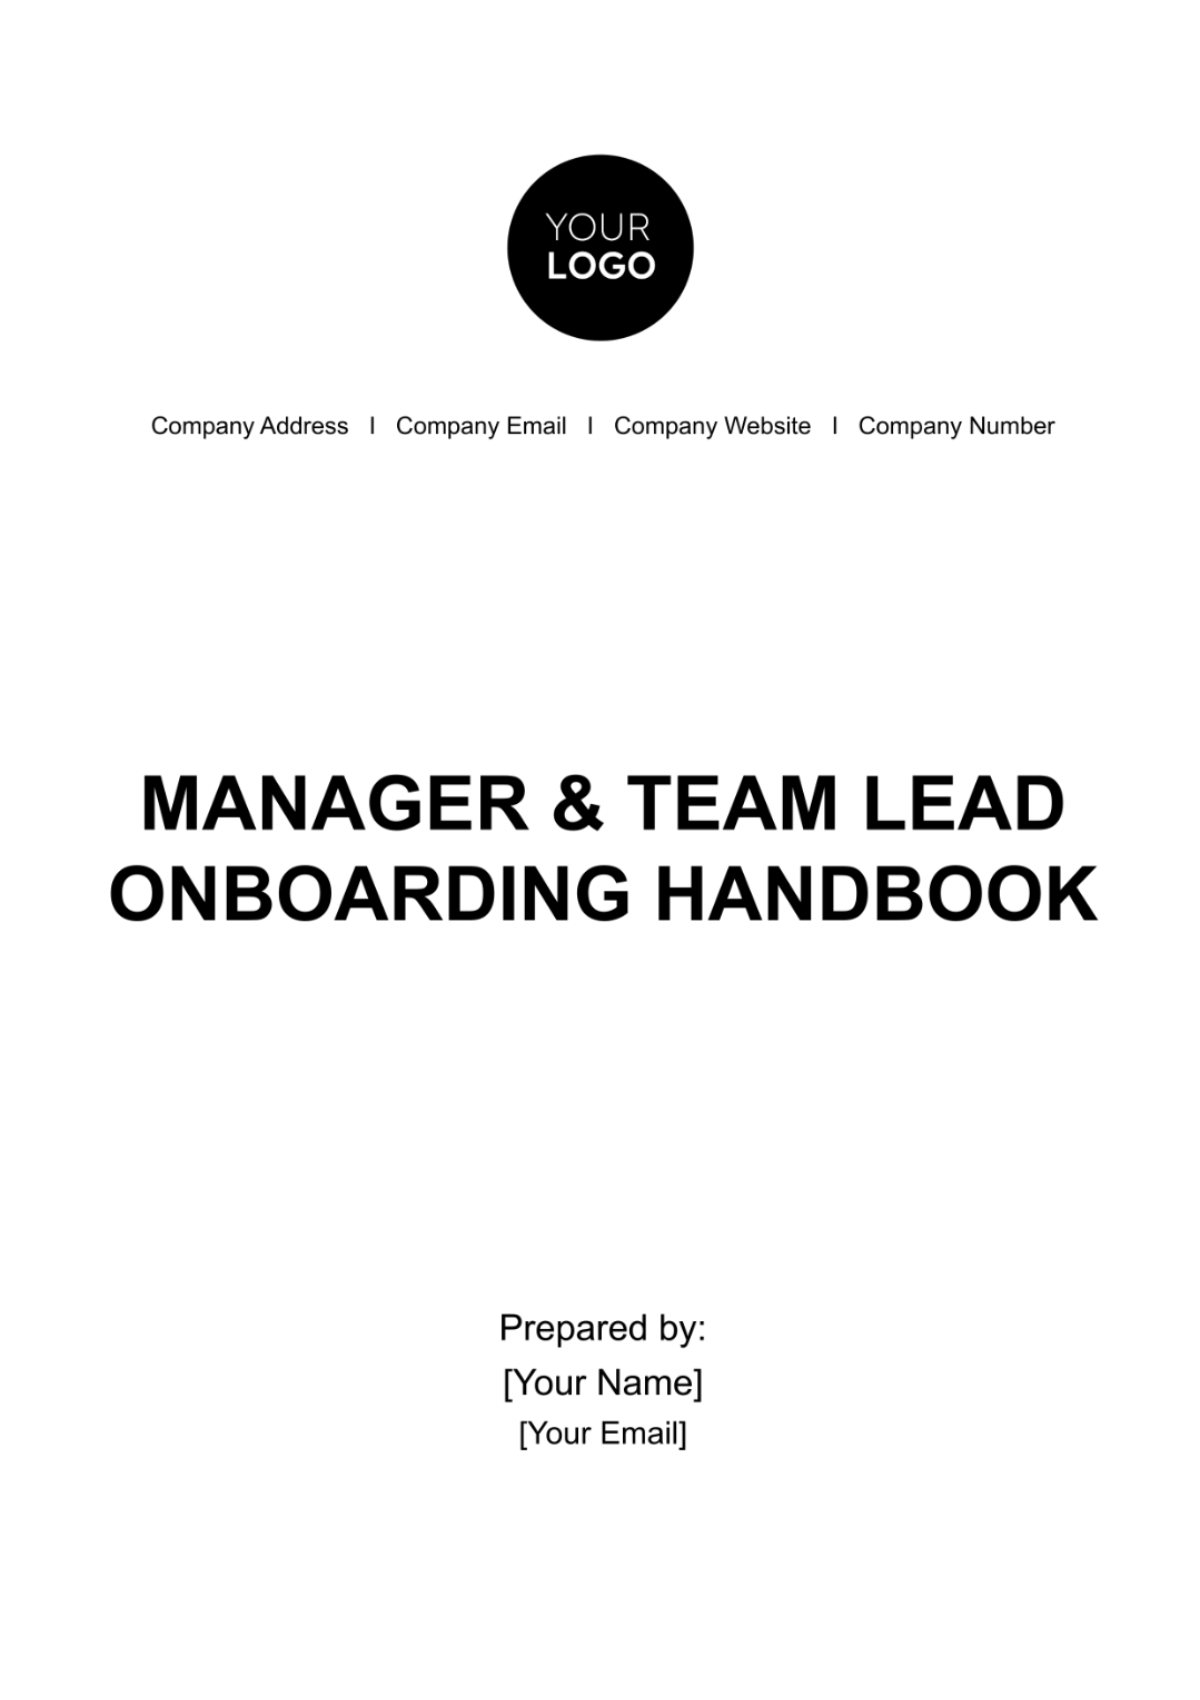 Manager & Team Lead Onboarding Handbook HR Template